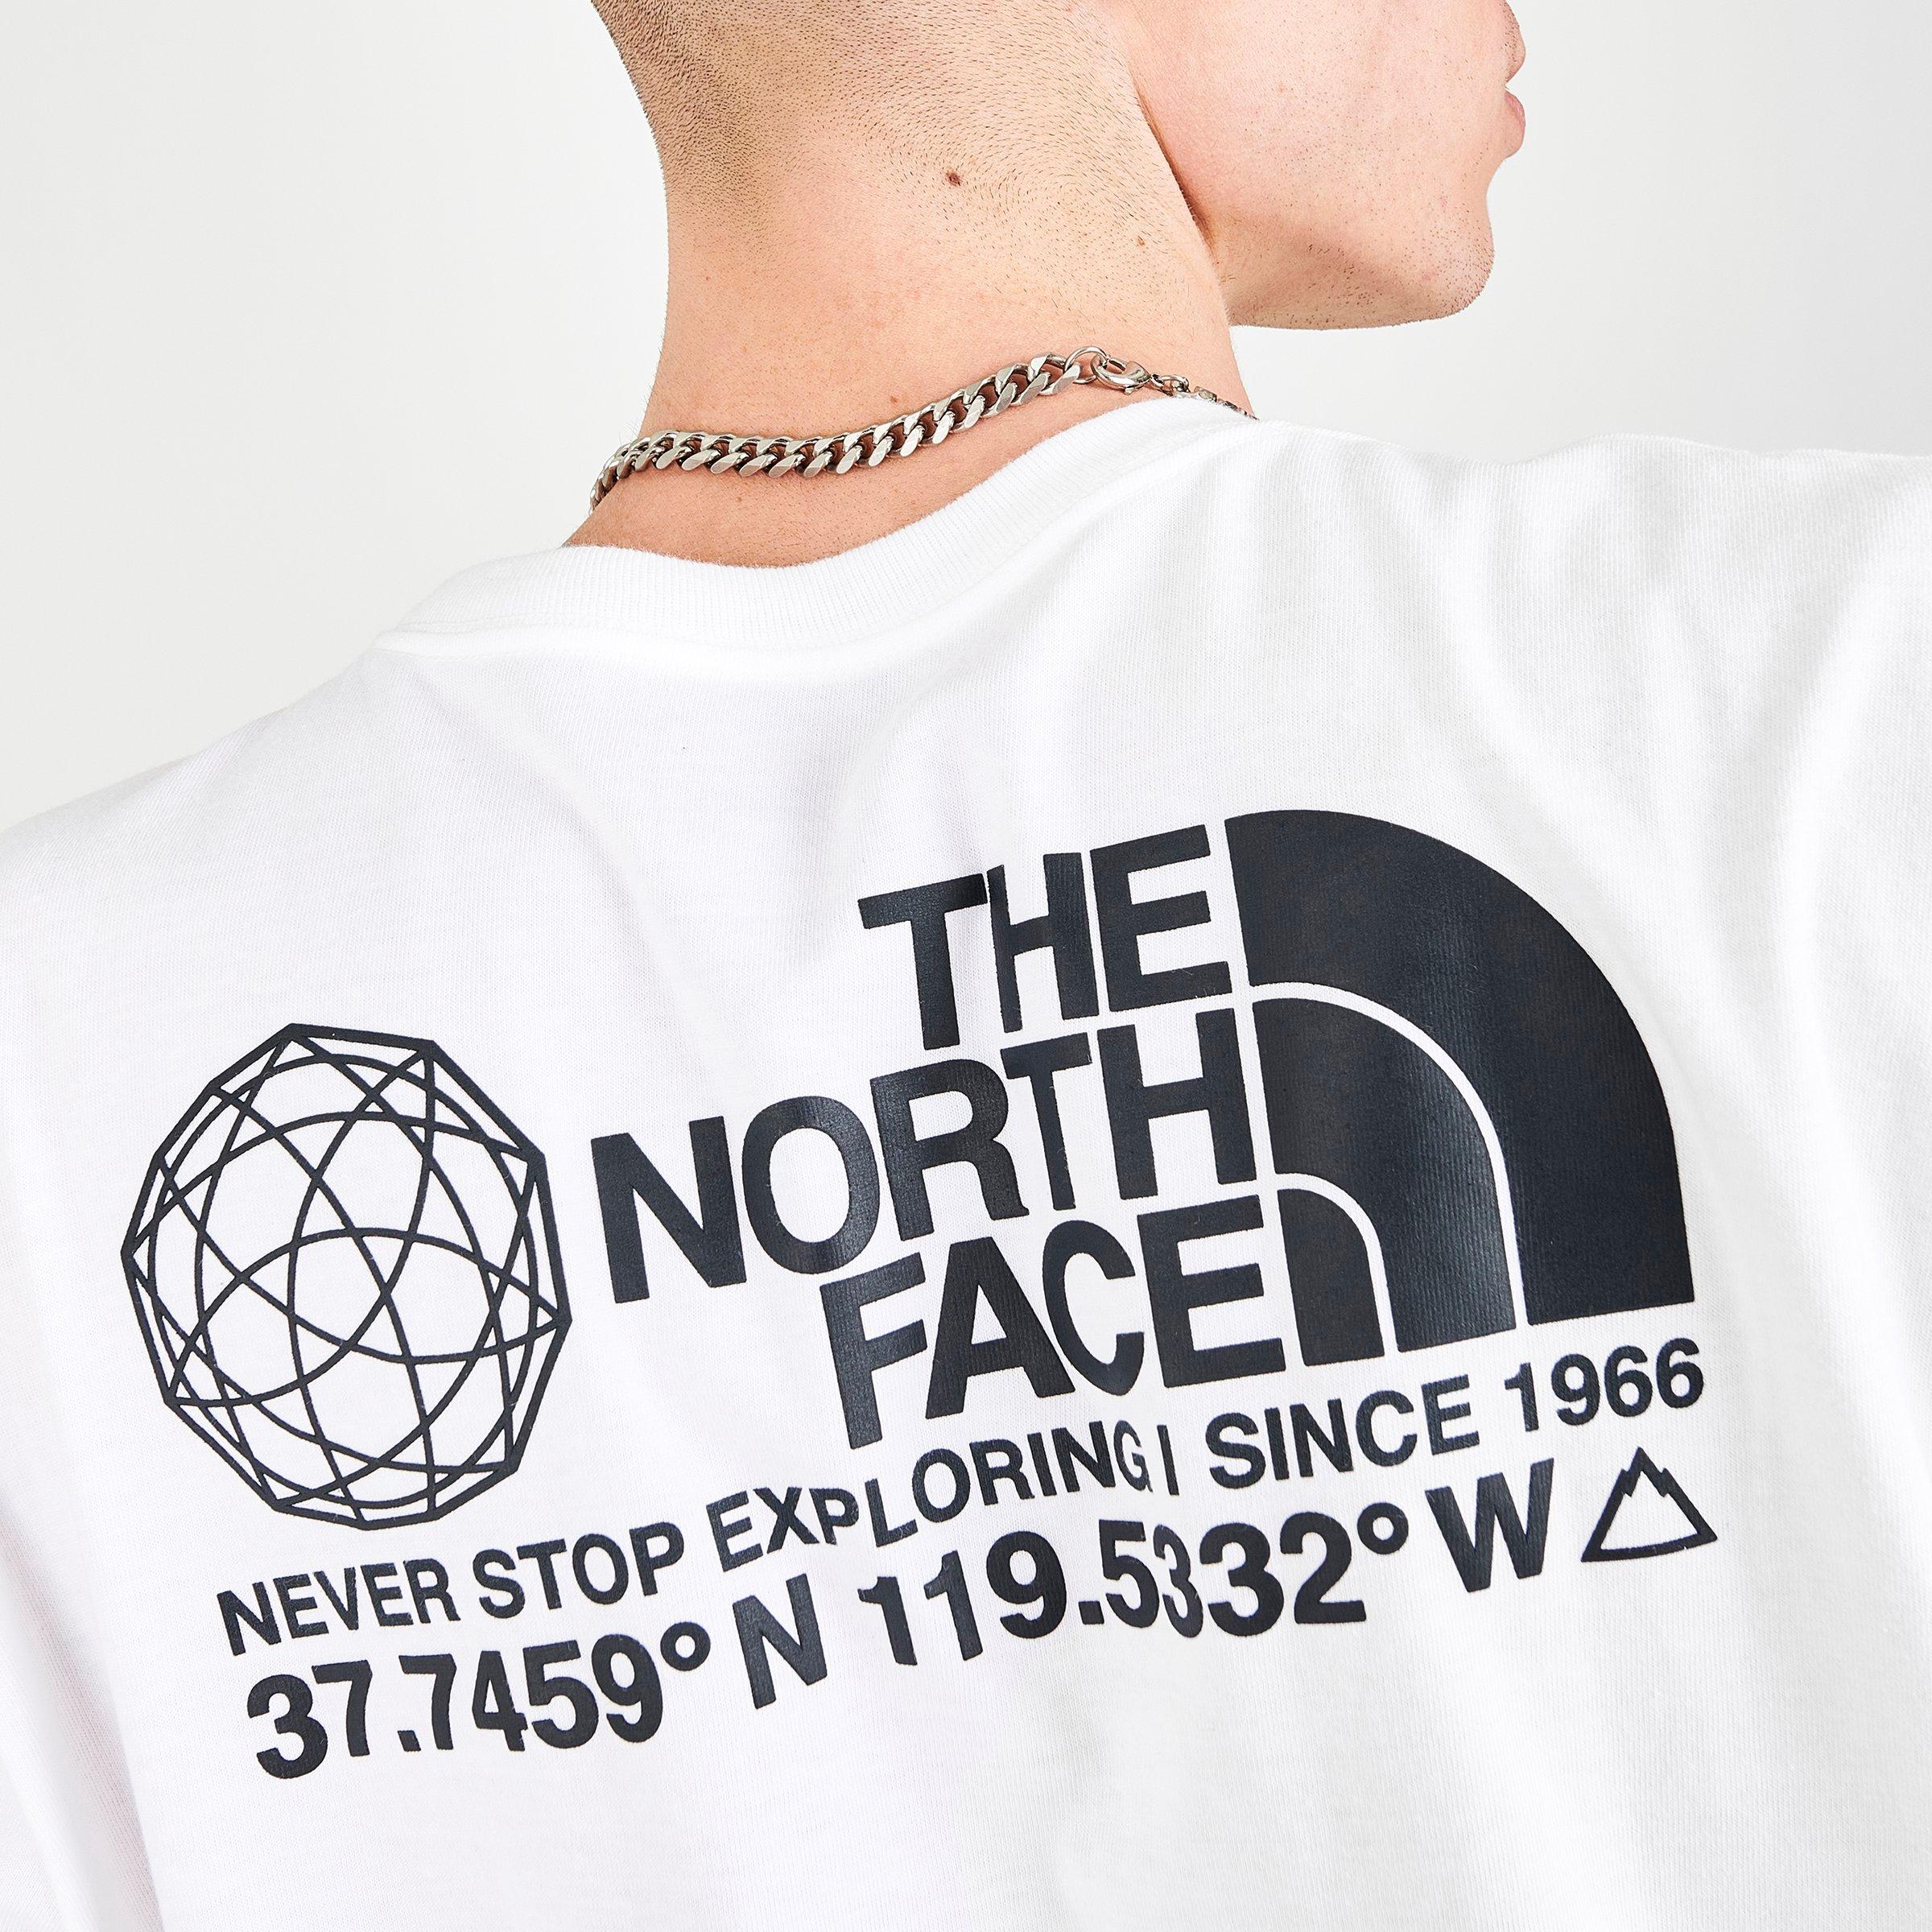 north face t shirt coordinates